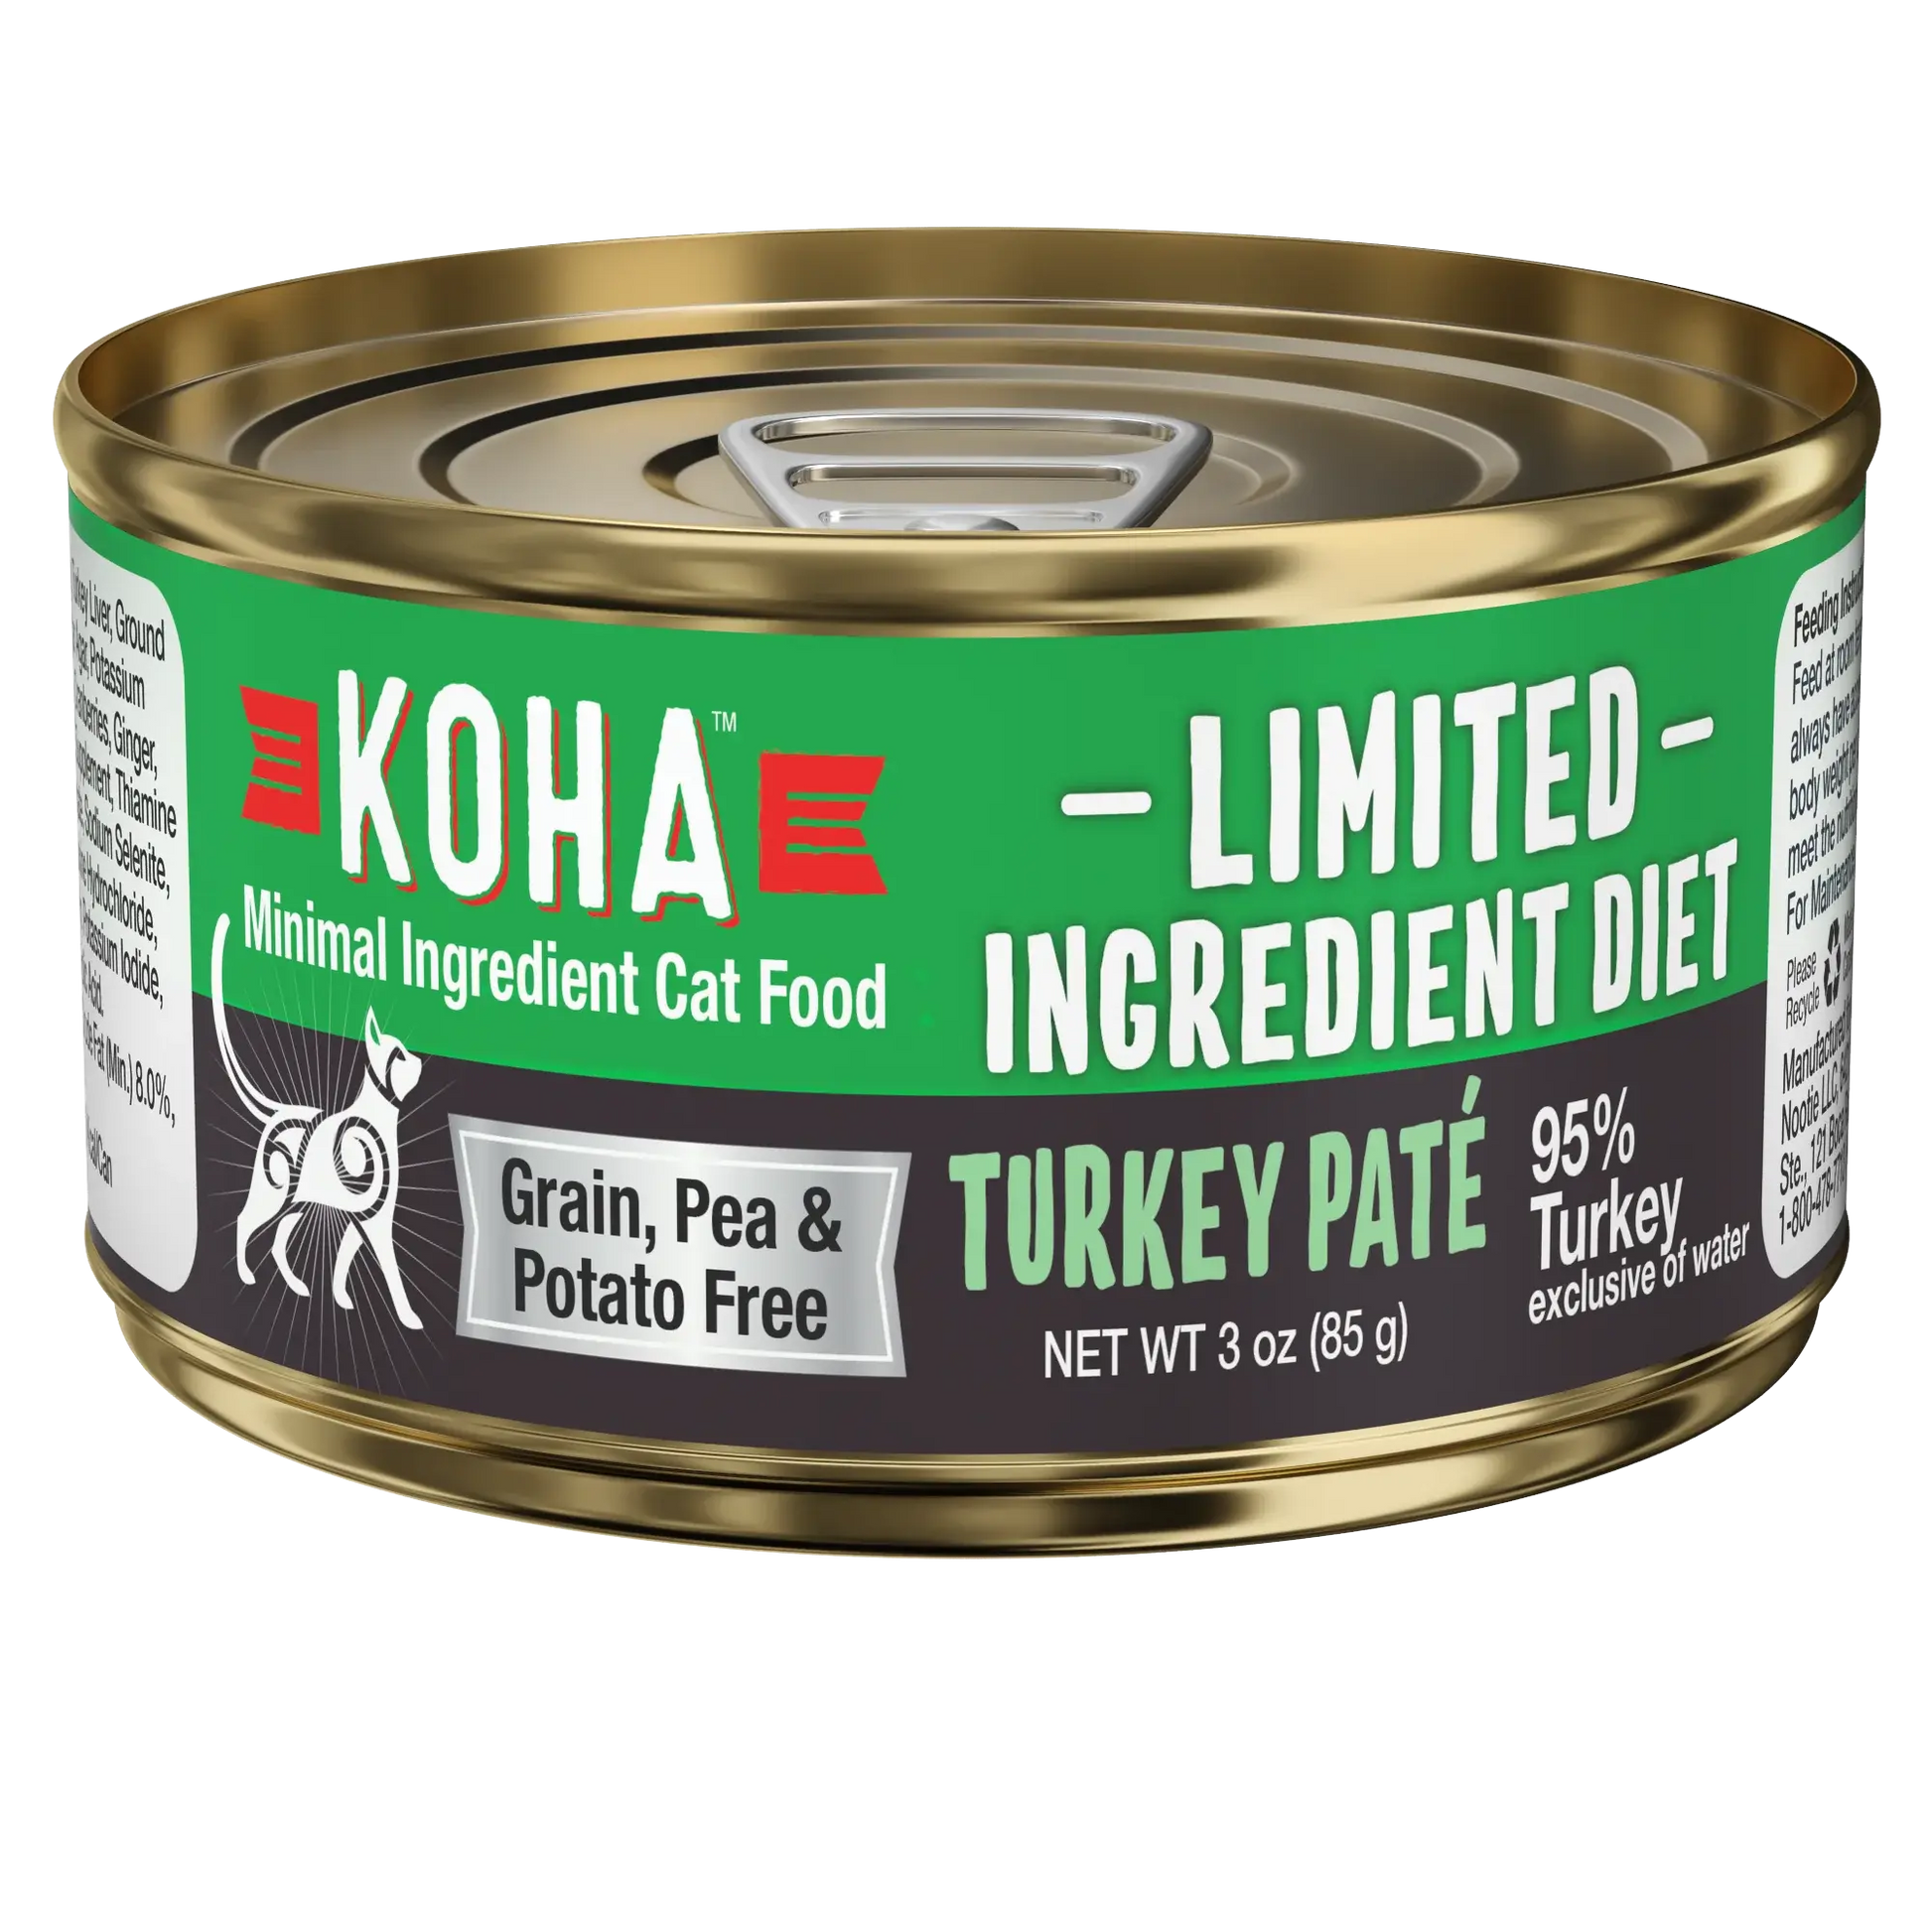 KOHA Limited Ingredient Diet Turkey Pâté Wet Cat Food KOHA